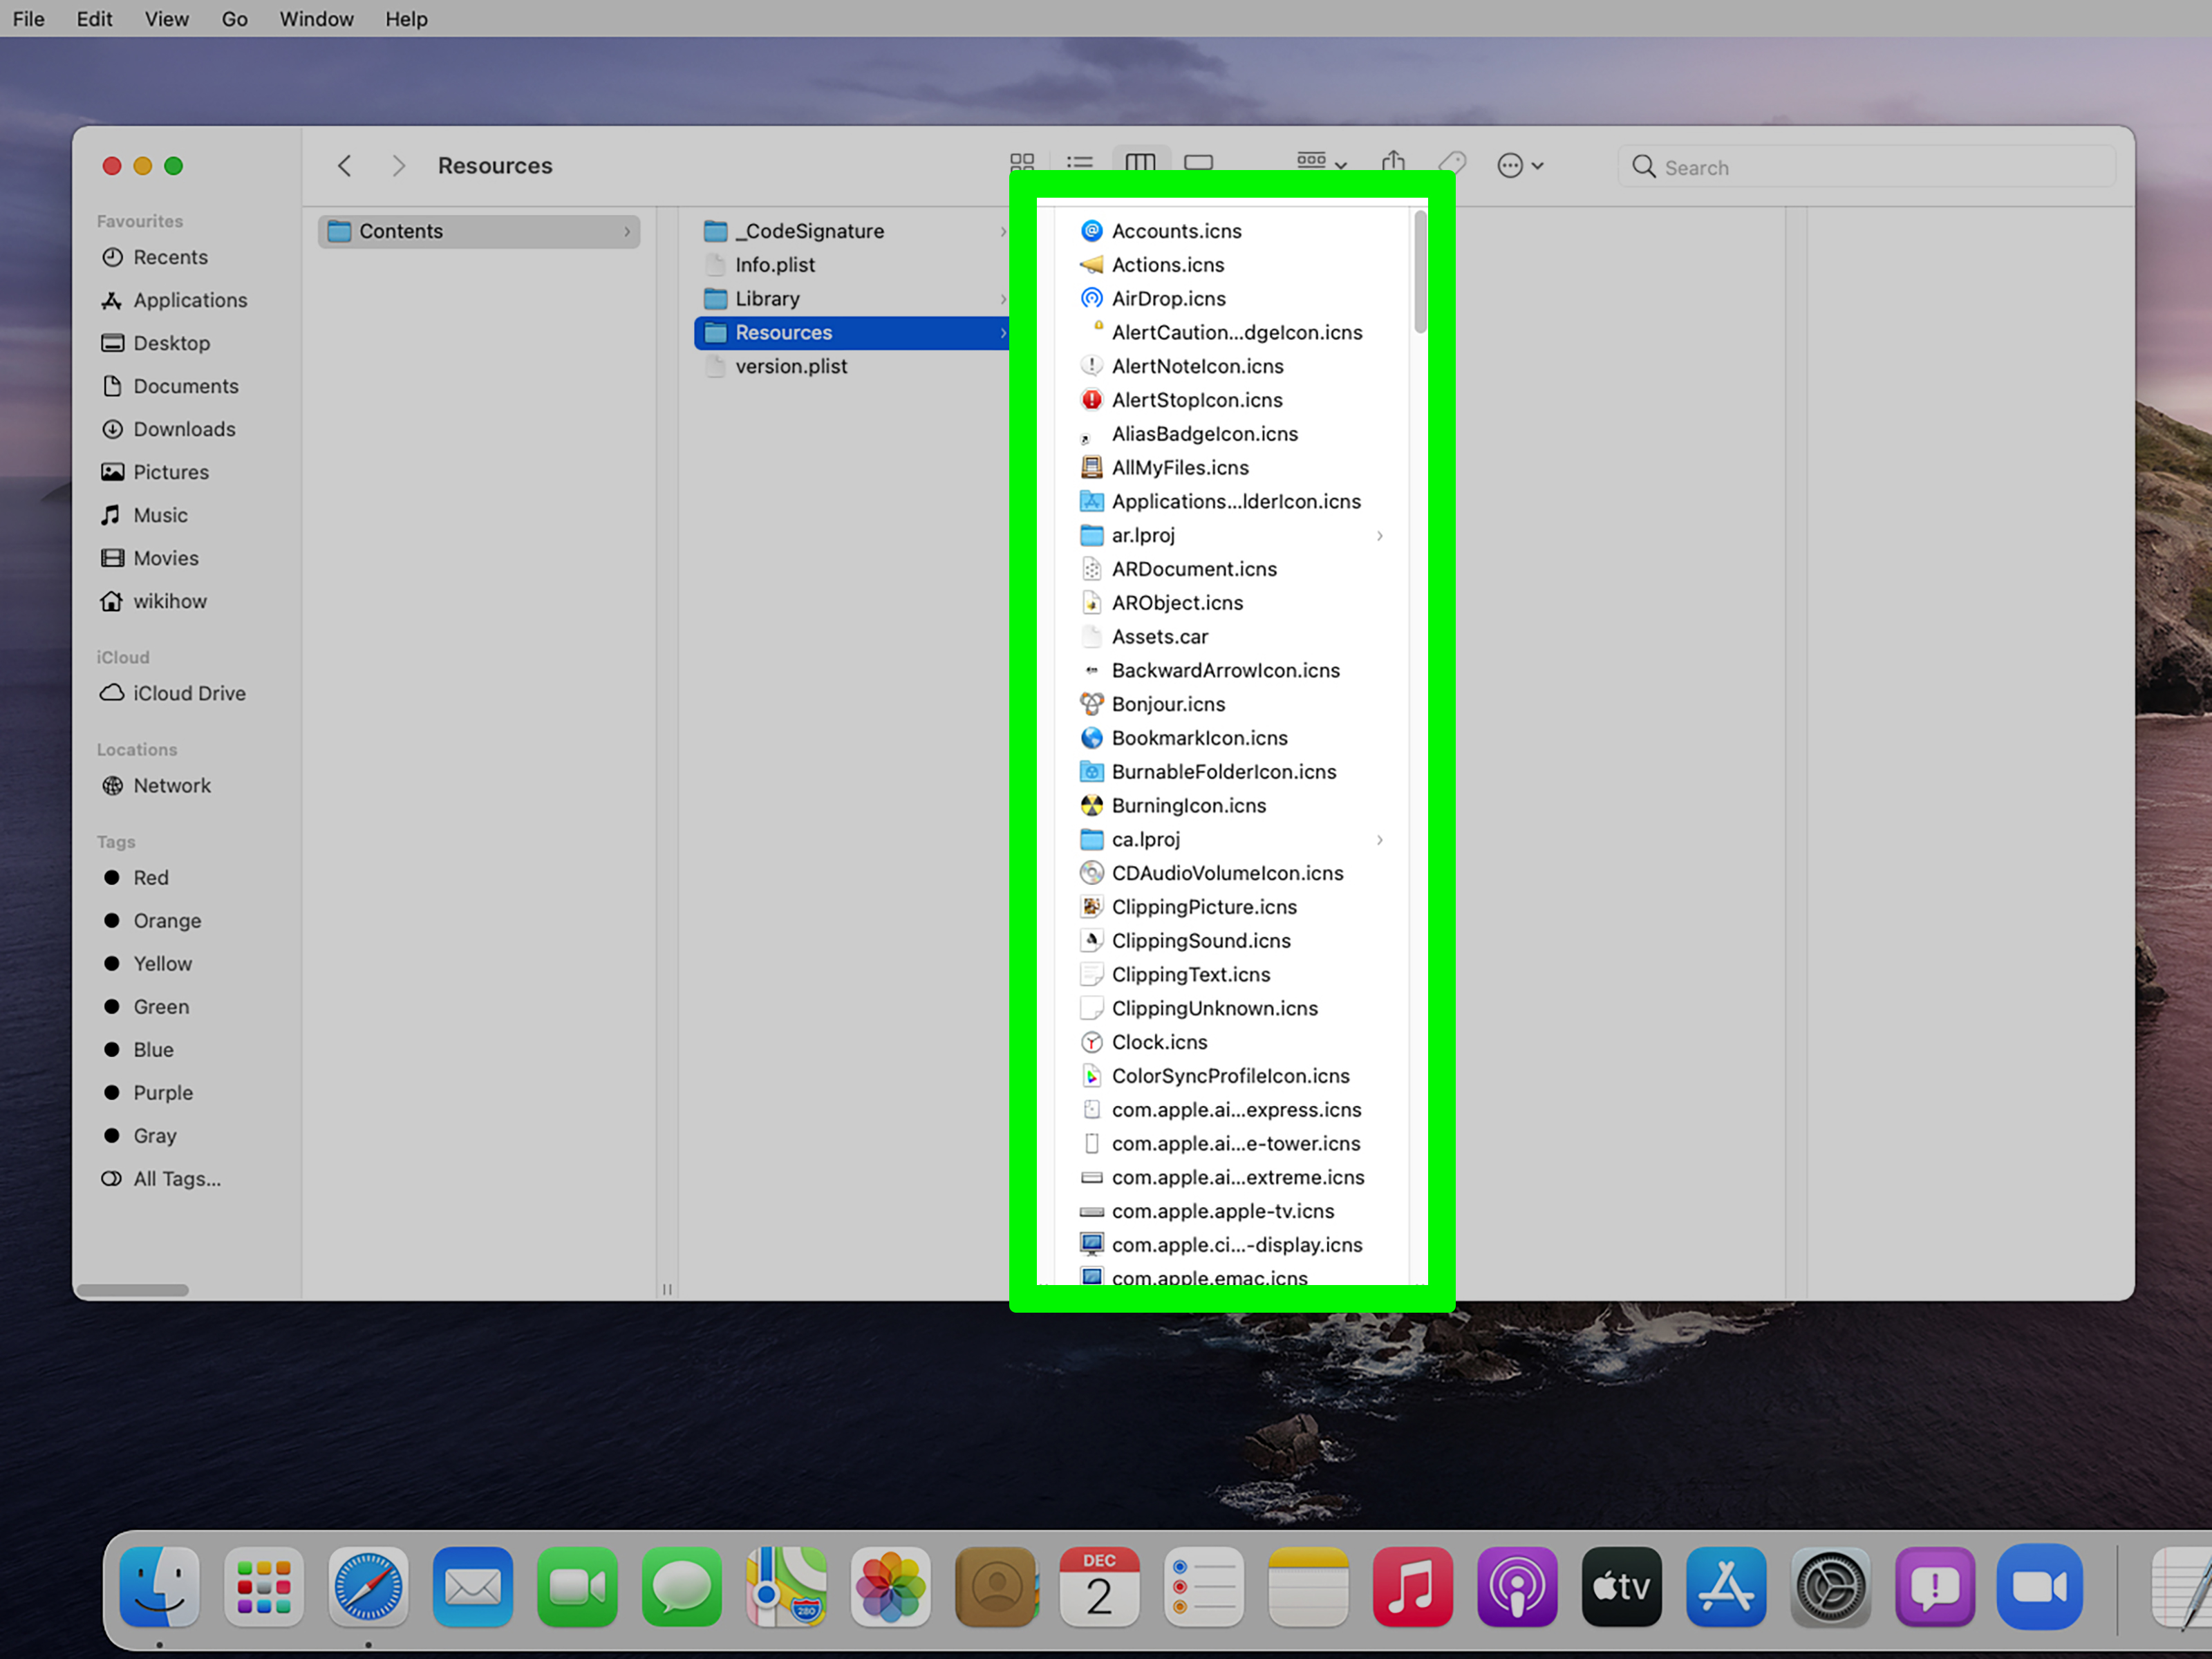 mac os x dock for windows 8.1